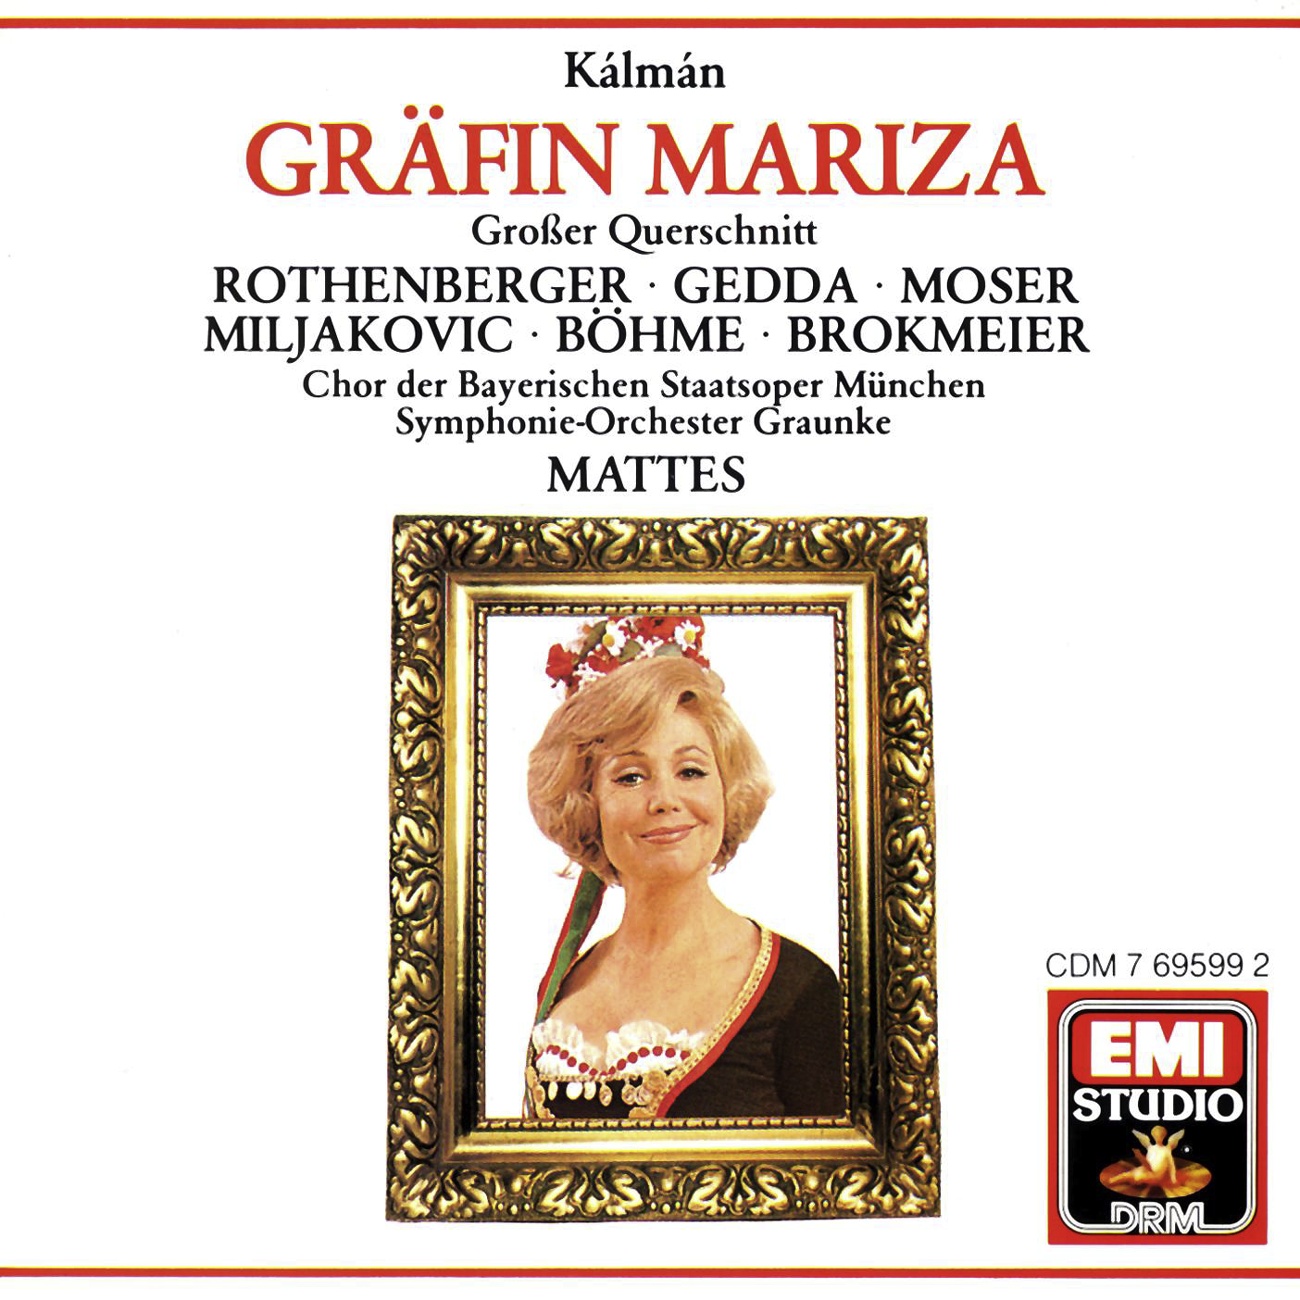 Gr fin Mariza  Highlights 1988 Digital Remaster, Erster Akt: Lustige Zigeunerweisen Chor